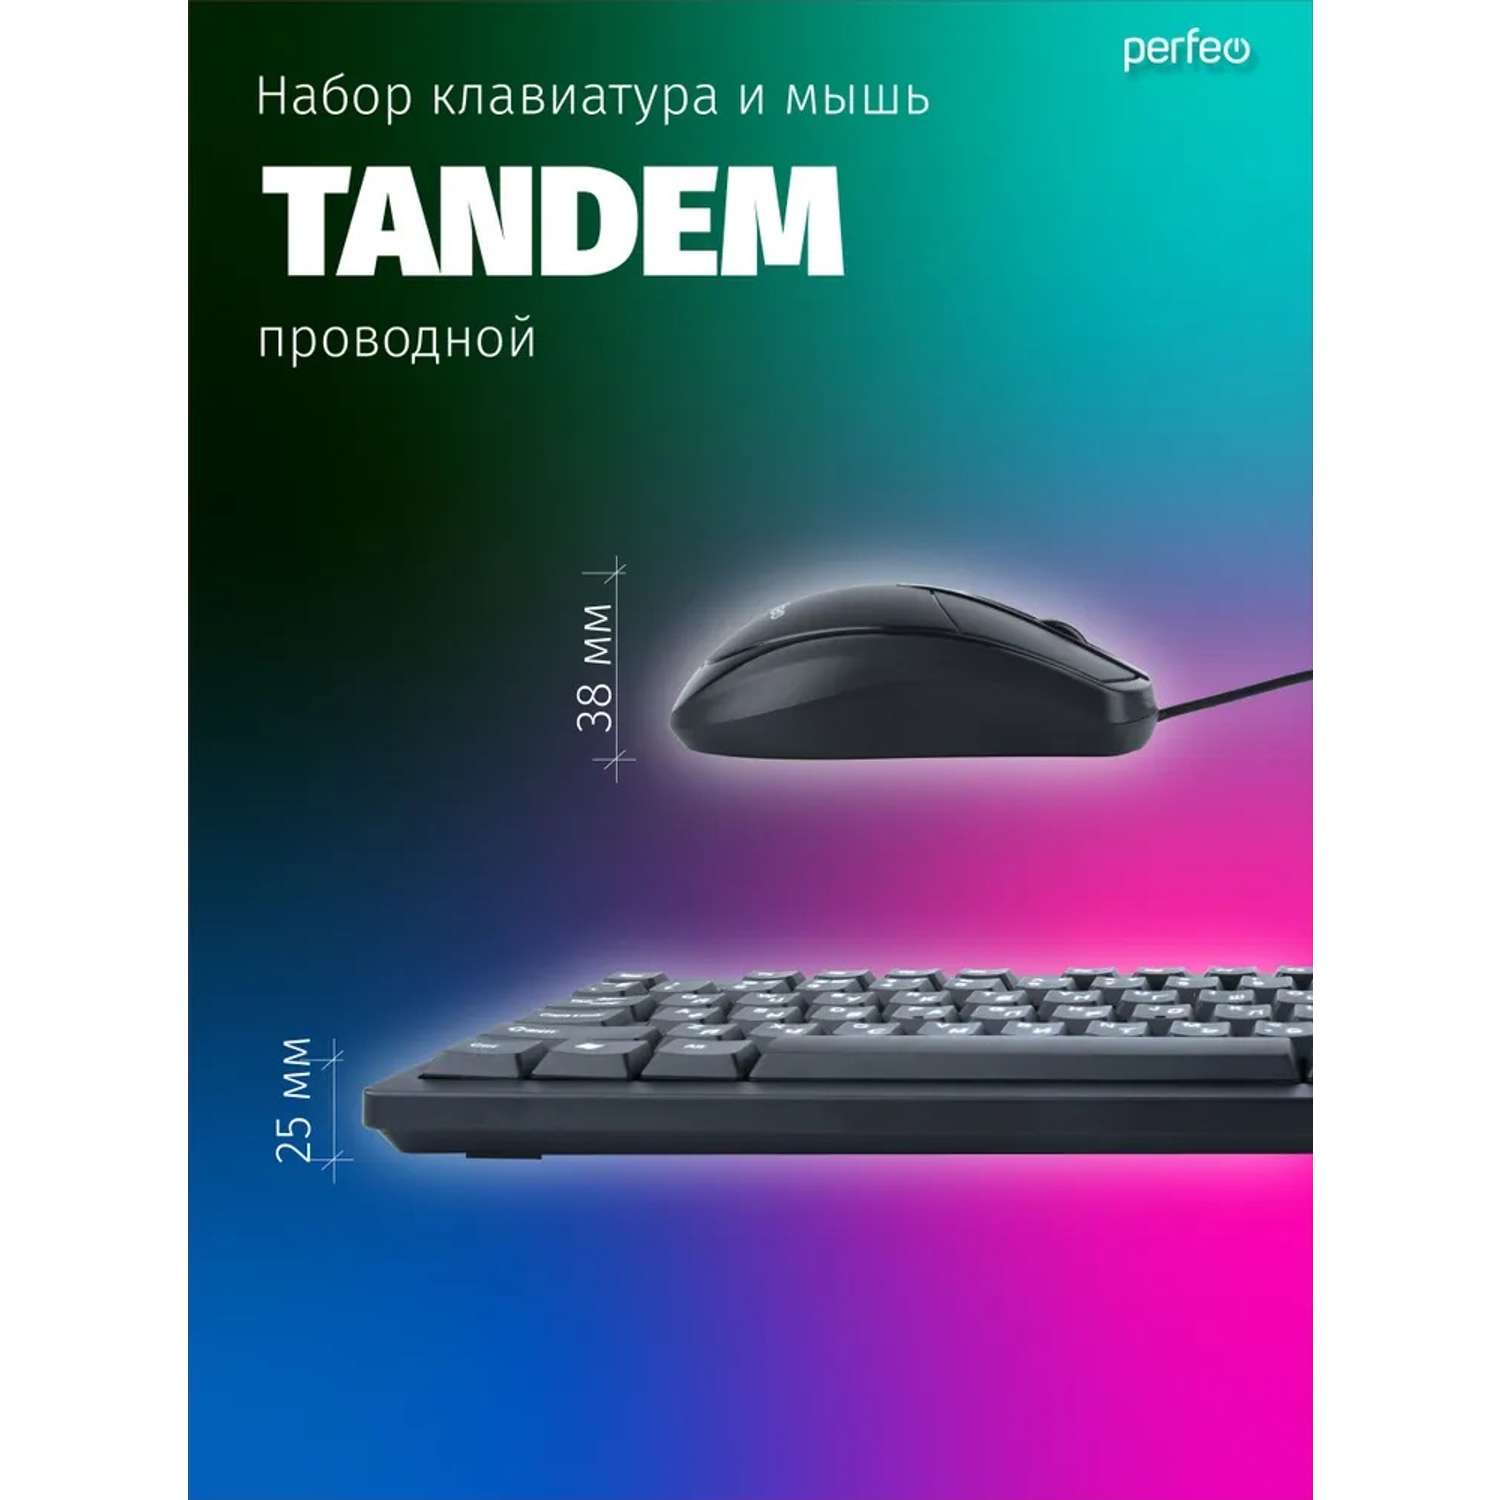 Набор клавиатура и мышь Perfeo Tandem - фото 6